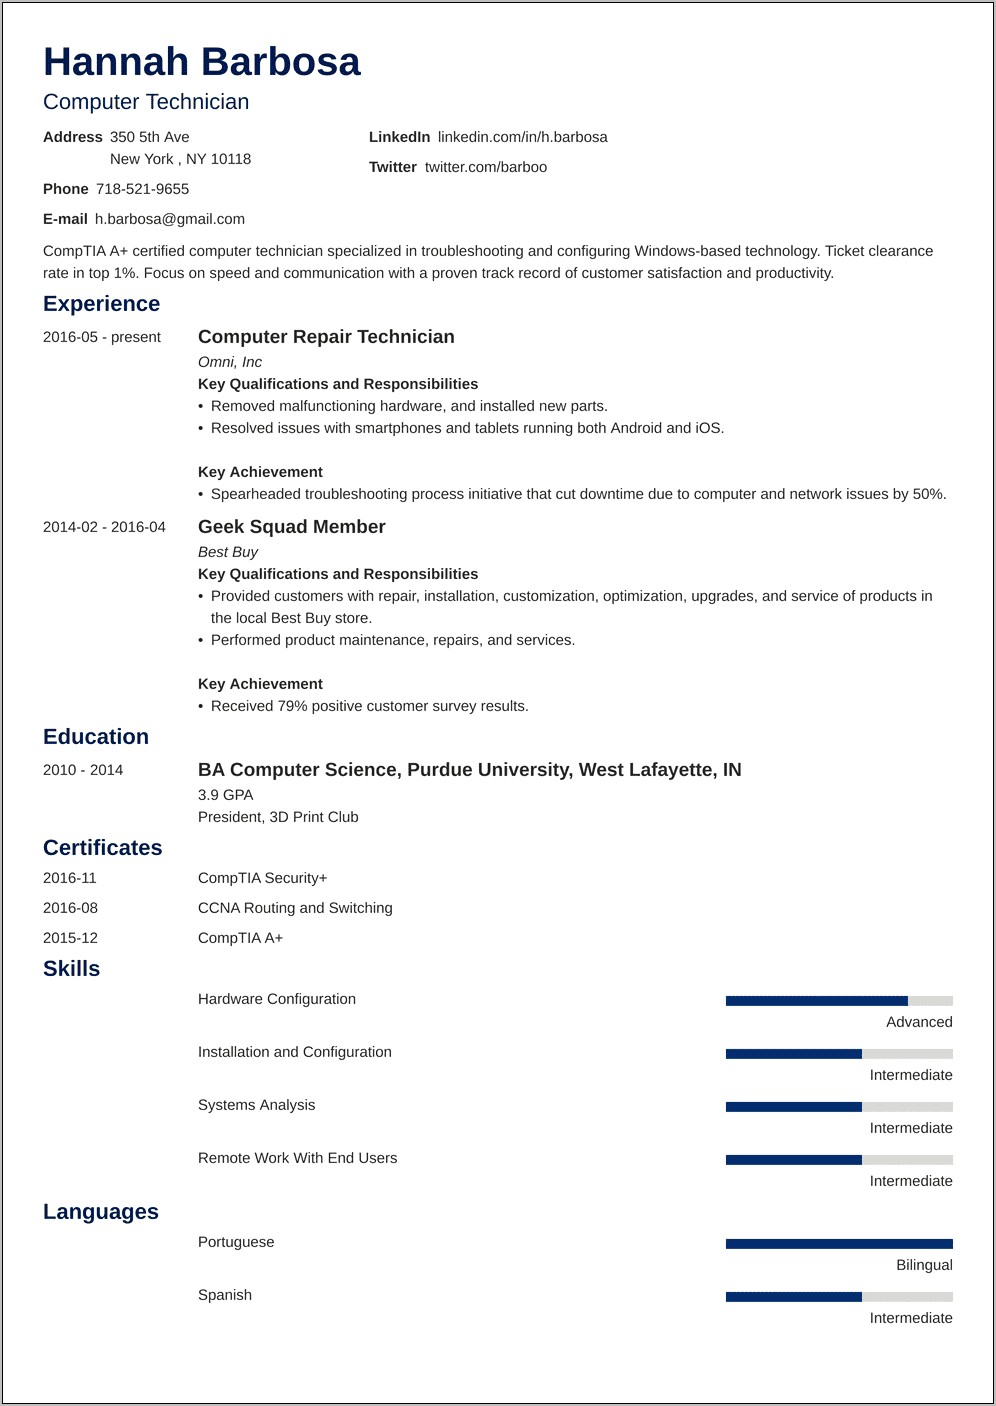 Computer Technician Resume Objective Sample